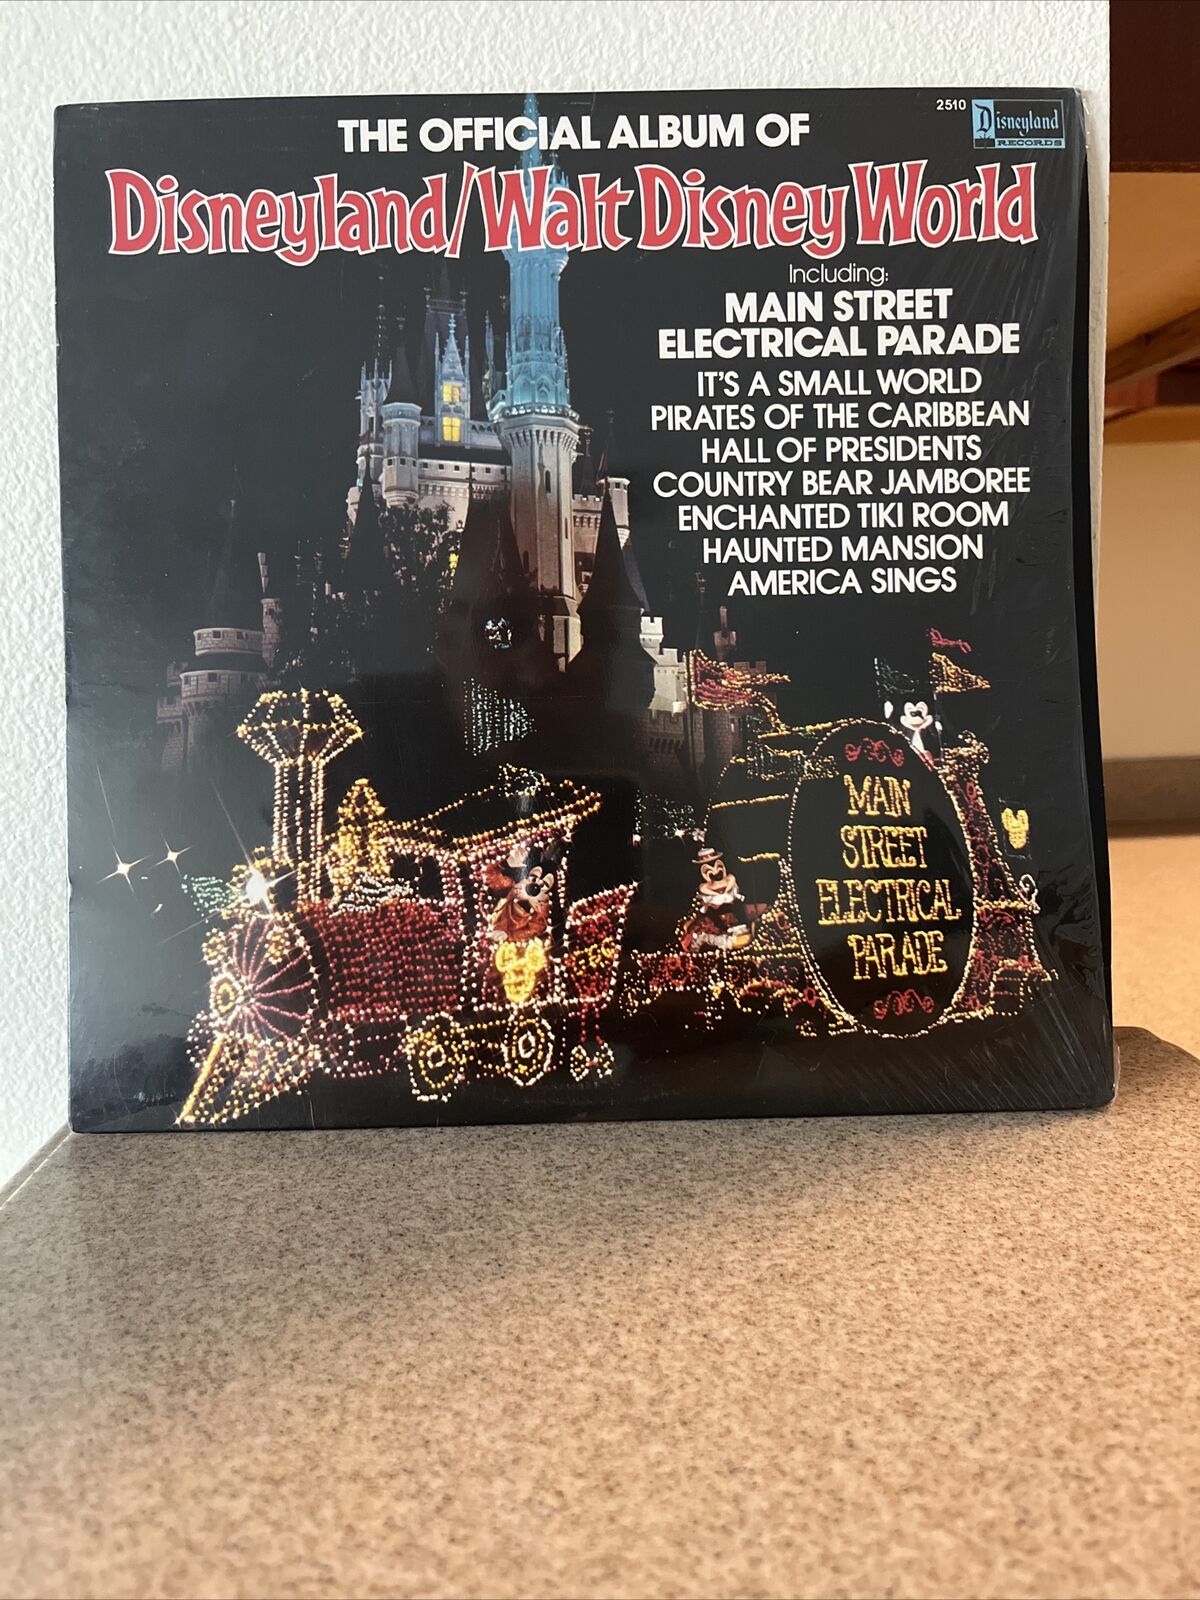 VINTAGE Vinyl - WALT DISNEY'S OFFICIAL ALBUM OF DISNEYLAND/WALT DISNEY WORLD